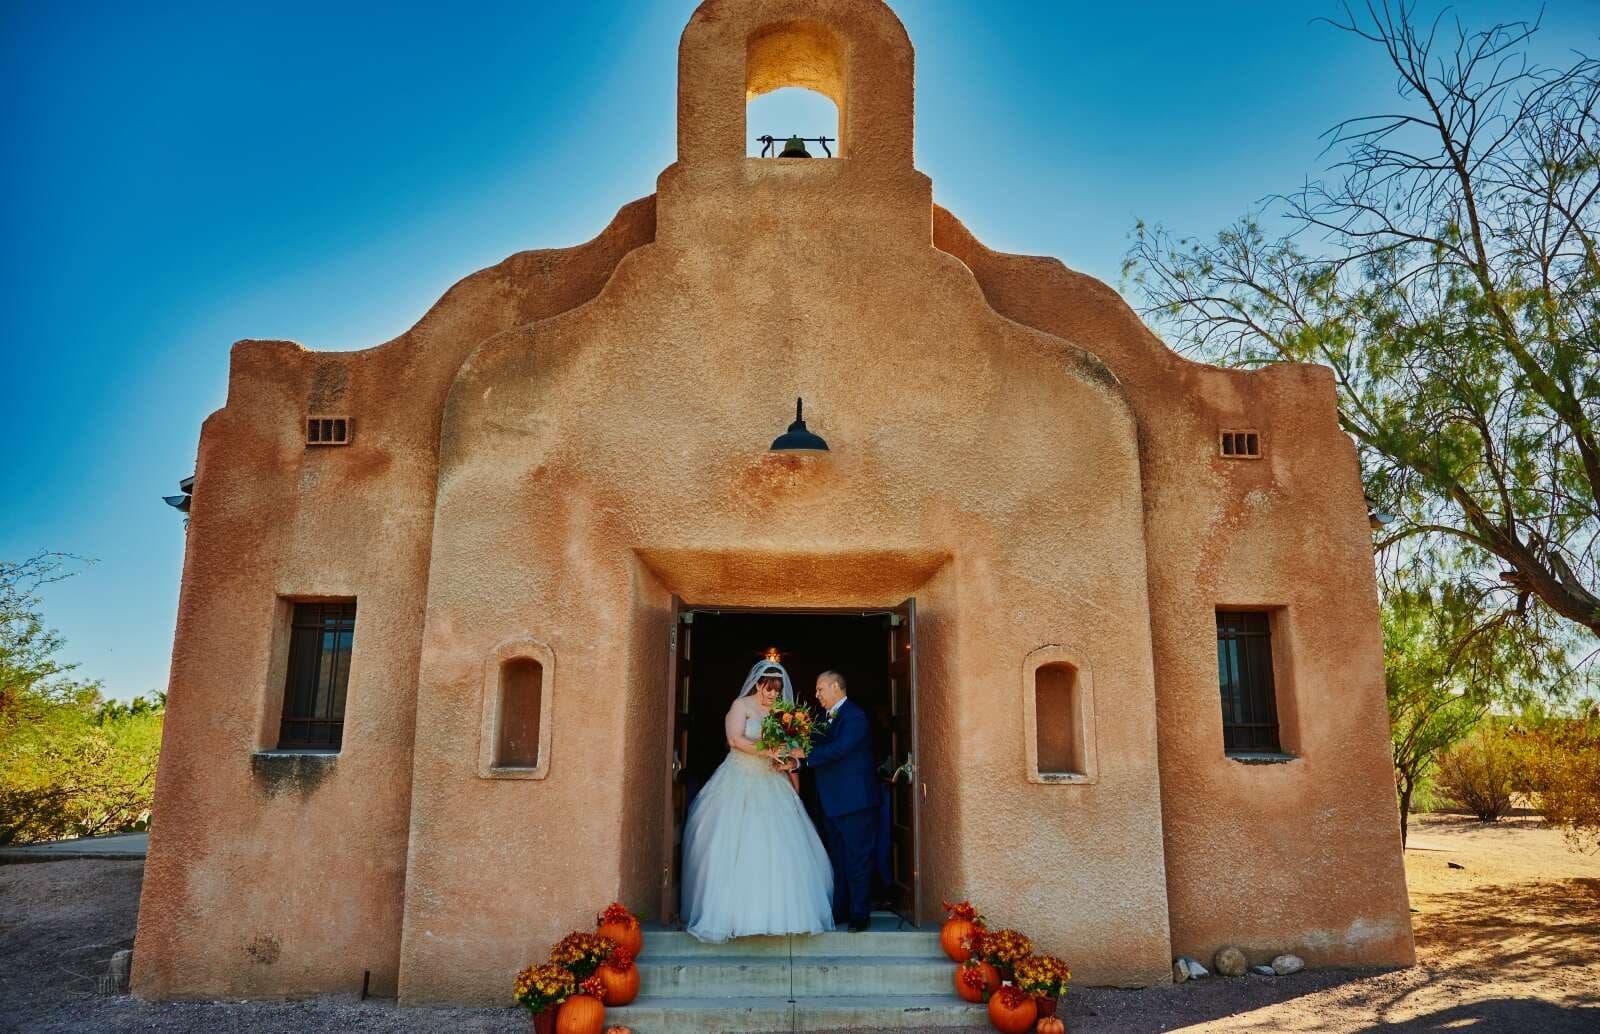 How to Plan a Wedding in Tucson, AZ